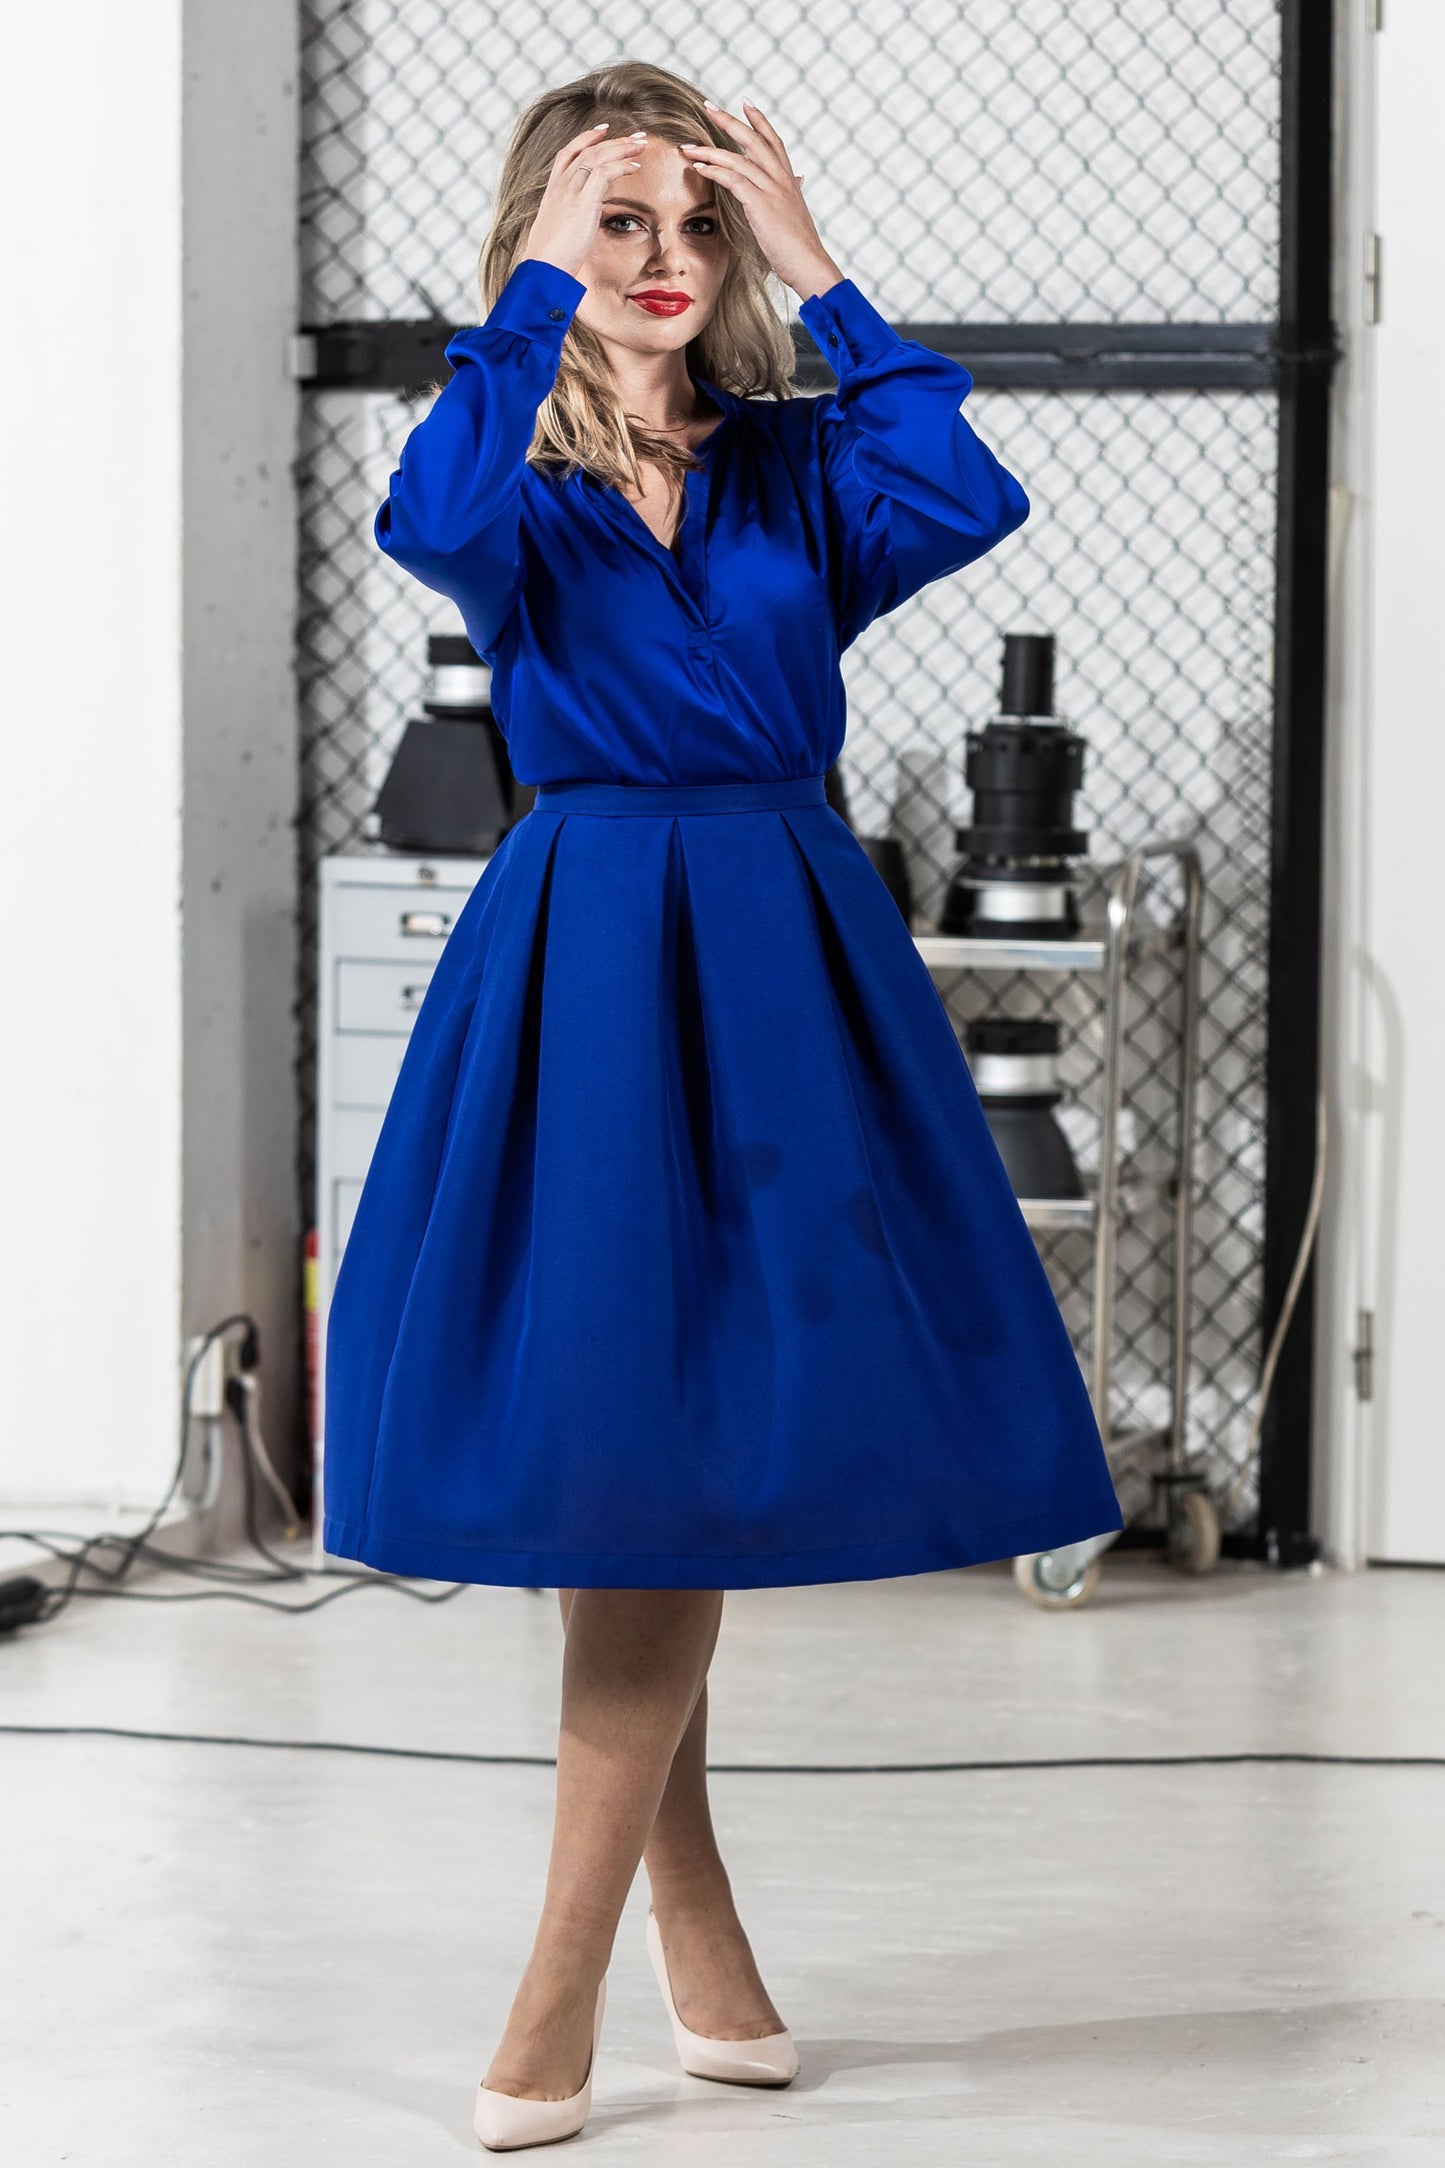 Blue voluminous skirt with pleats